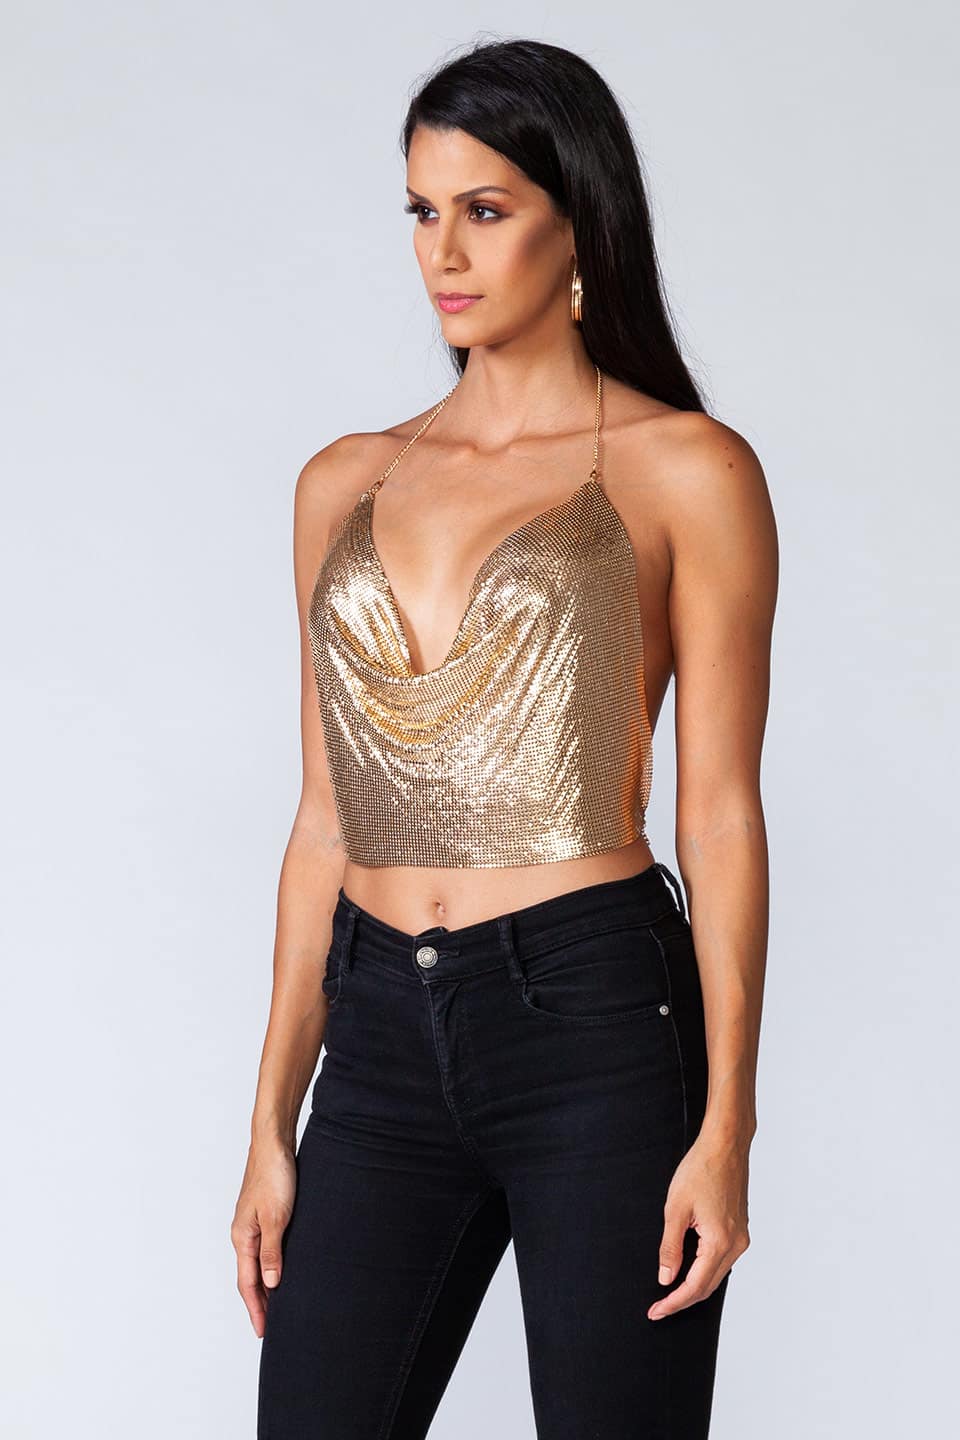 Model wears metal crop top in gold color, in natural pose